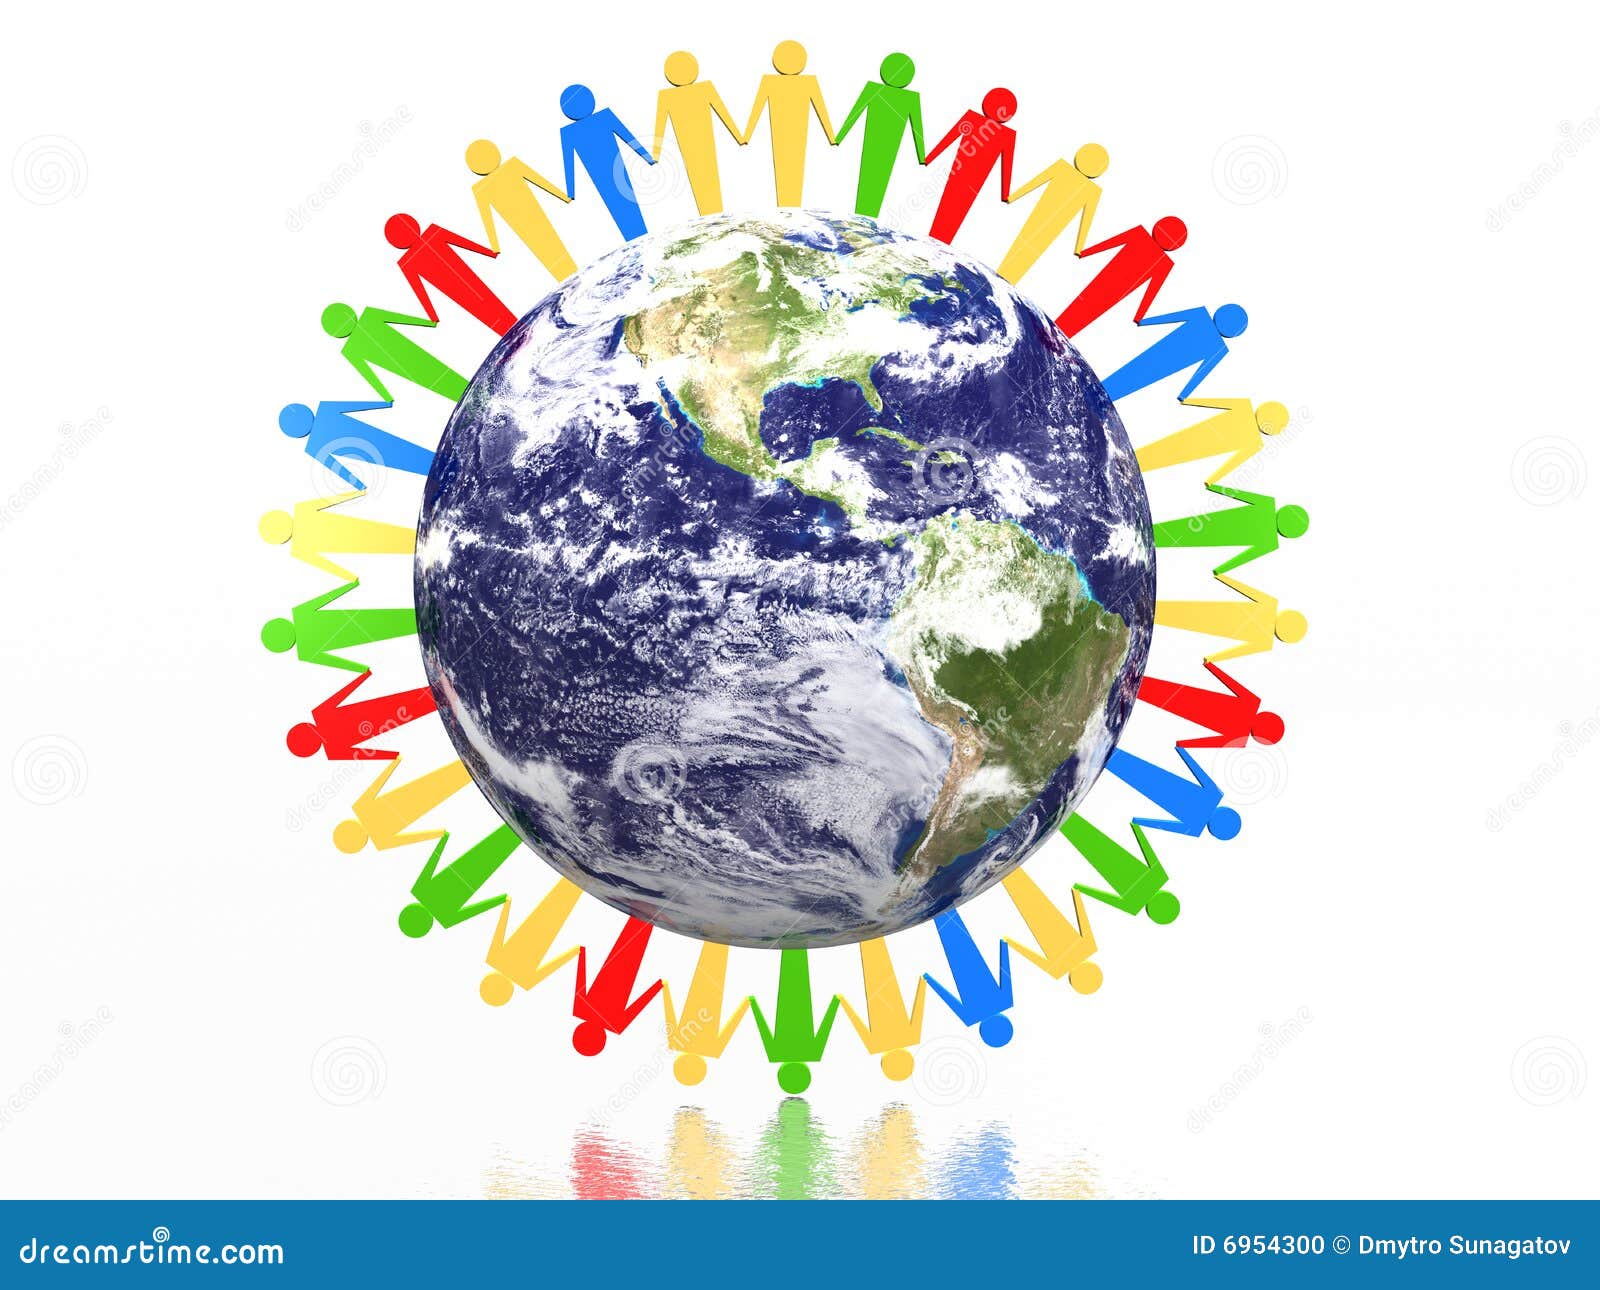 World partnership stock illustration. Illustration of humans - 6954300